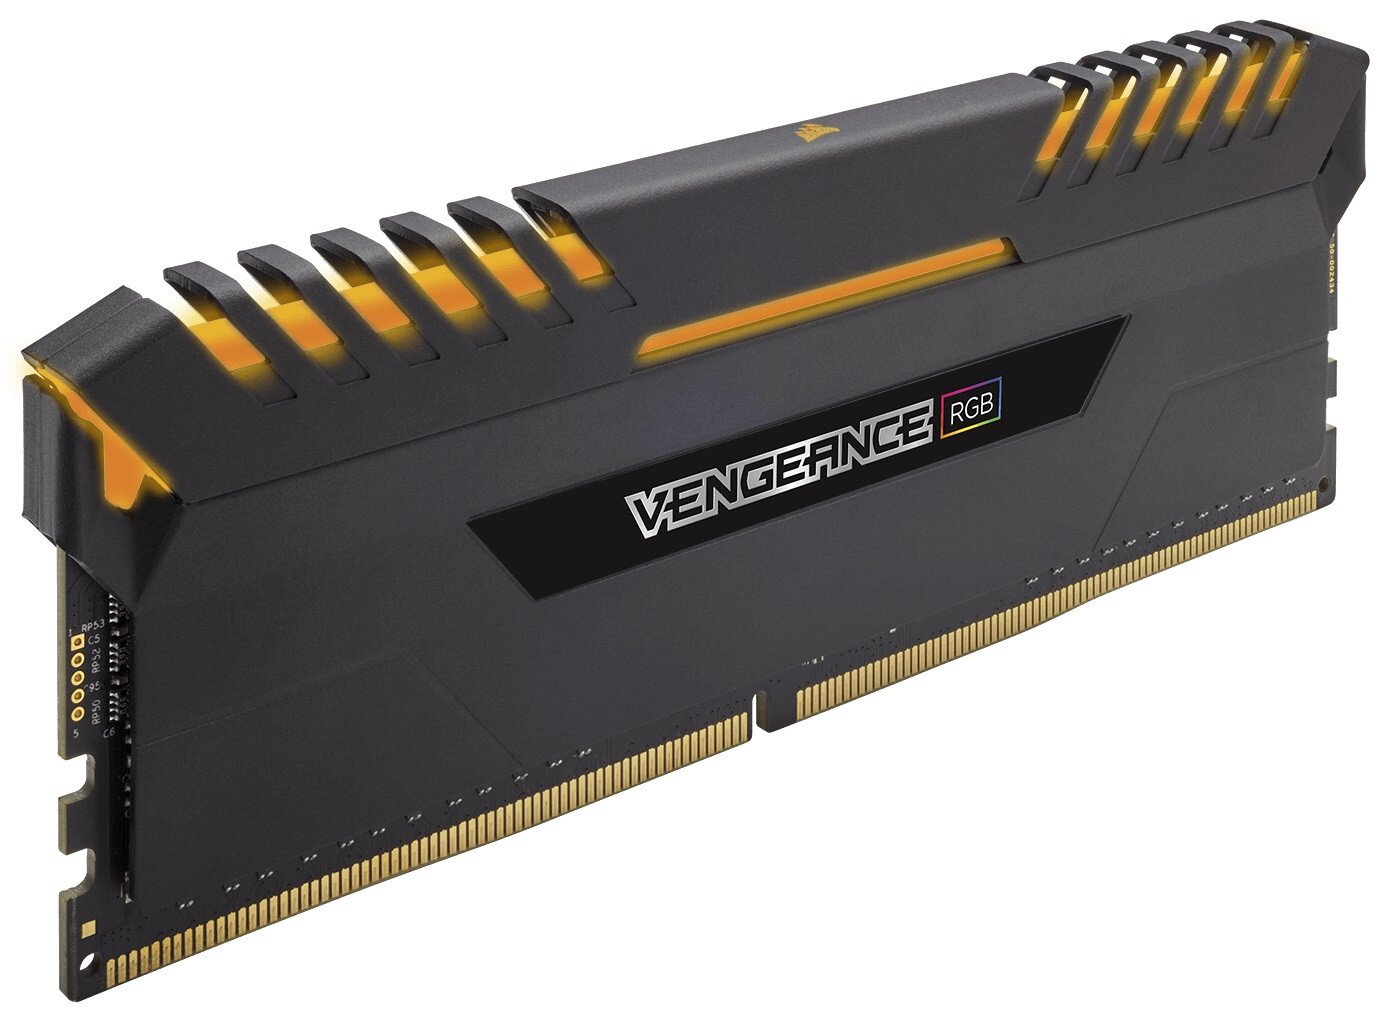 Buy Corsair Vengeance RGB 16GB (2 x 8GB) DDR4 DRAM 3200MHz C16 Memory Kit  online Worldwide